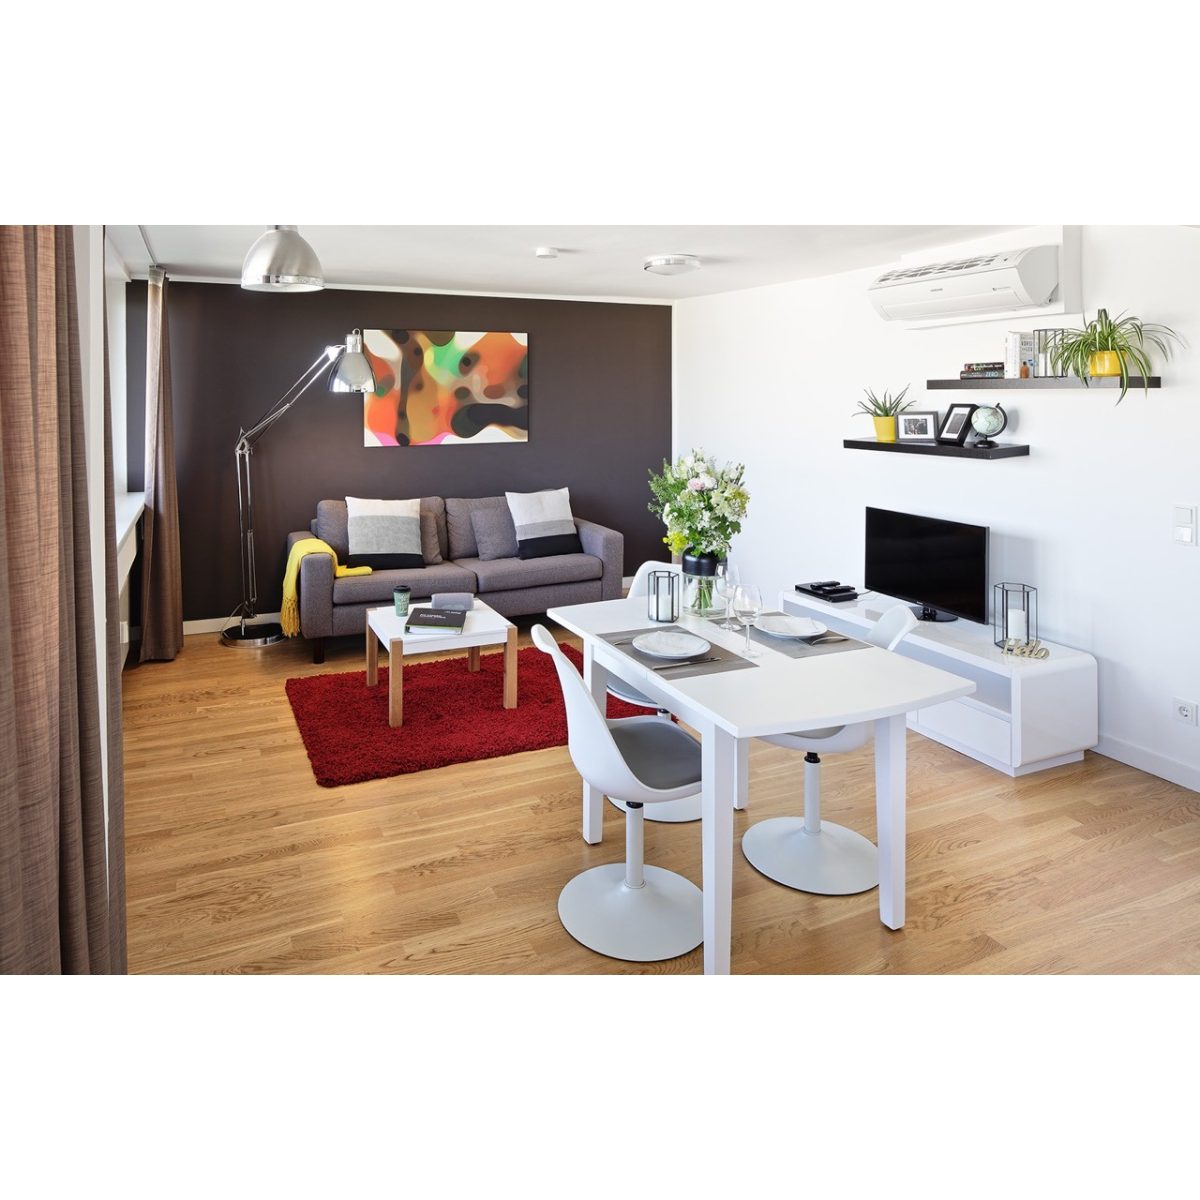 Elegant and Sophisticated apartment (Hamburg) 4